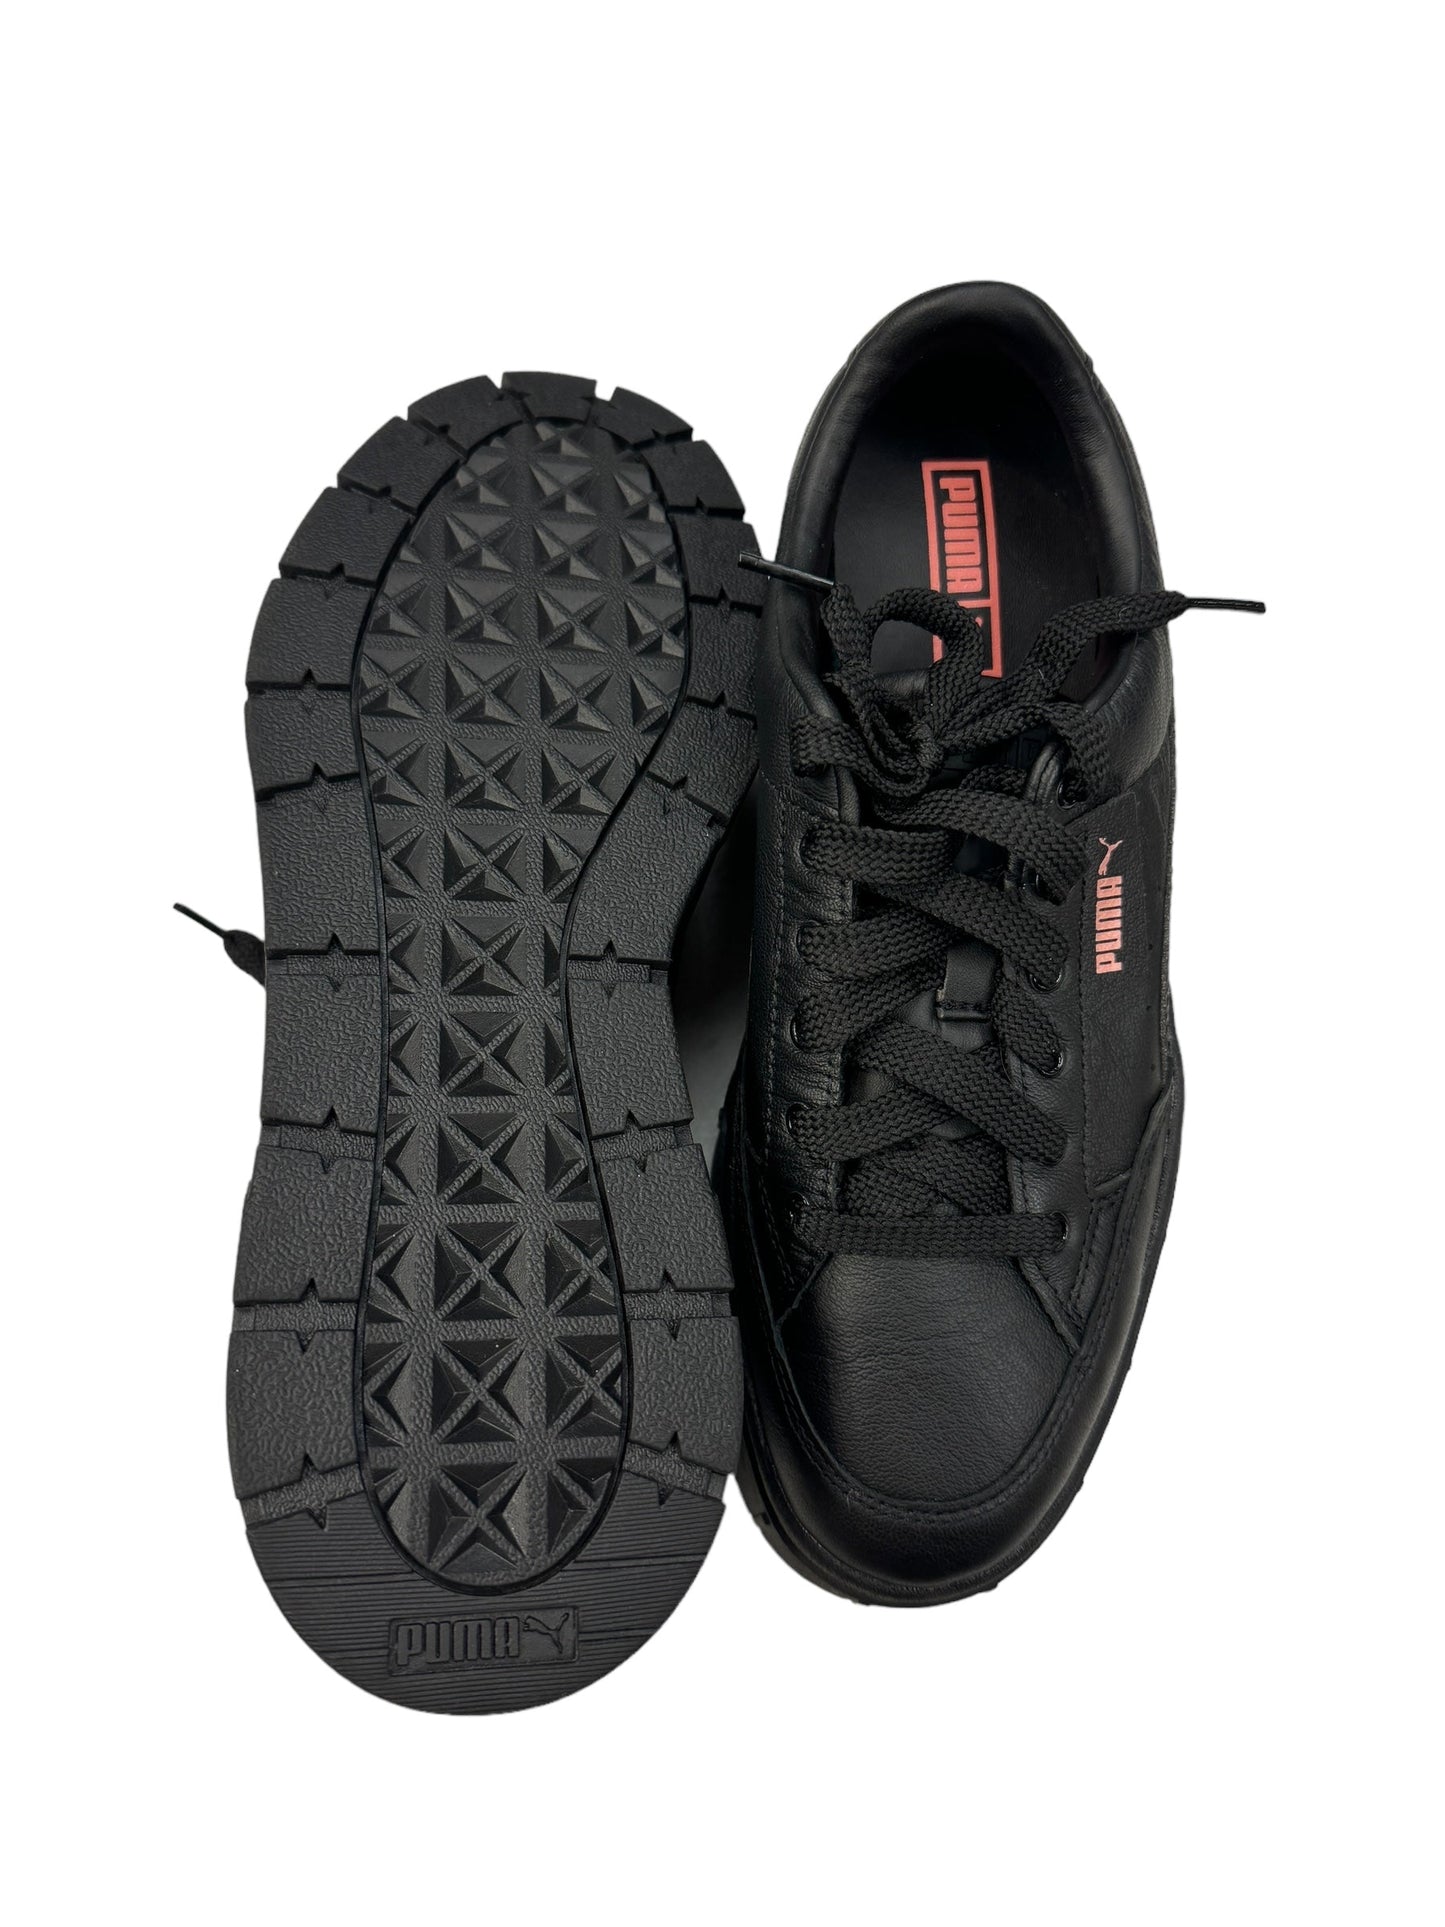 Black Shoes Athletic Puma, Size 9.5